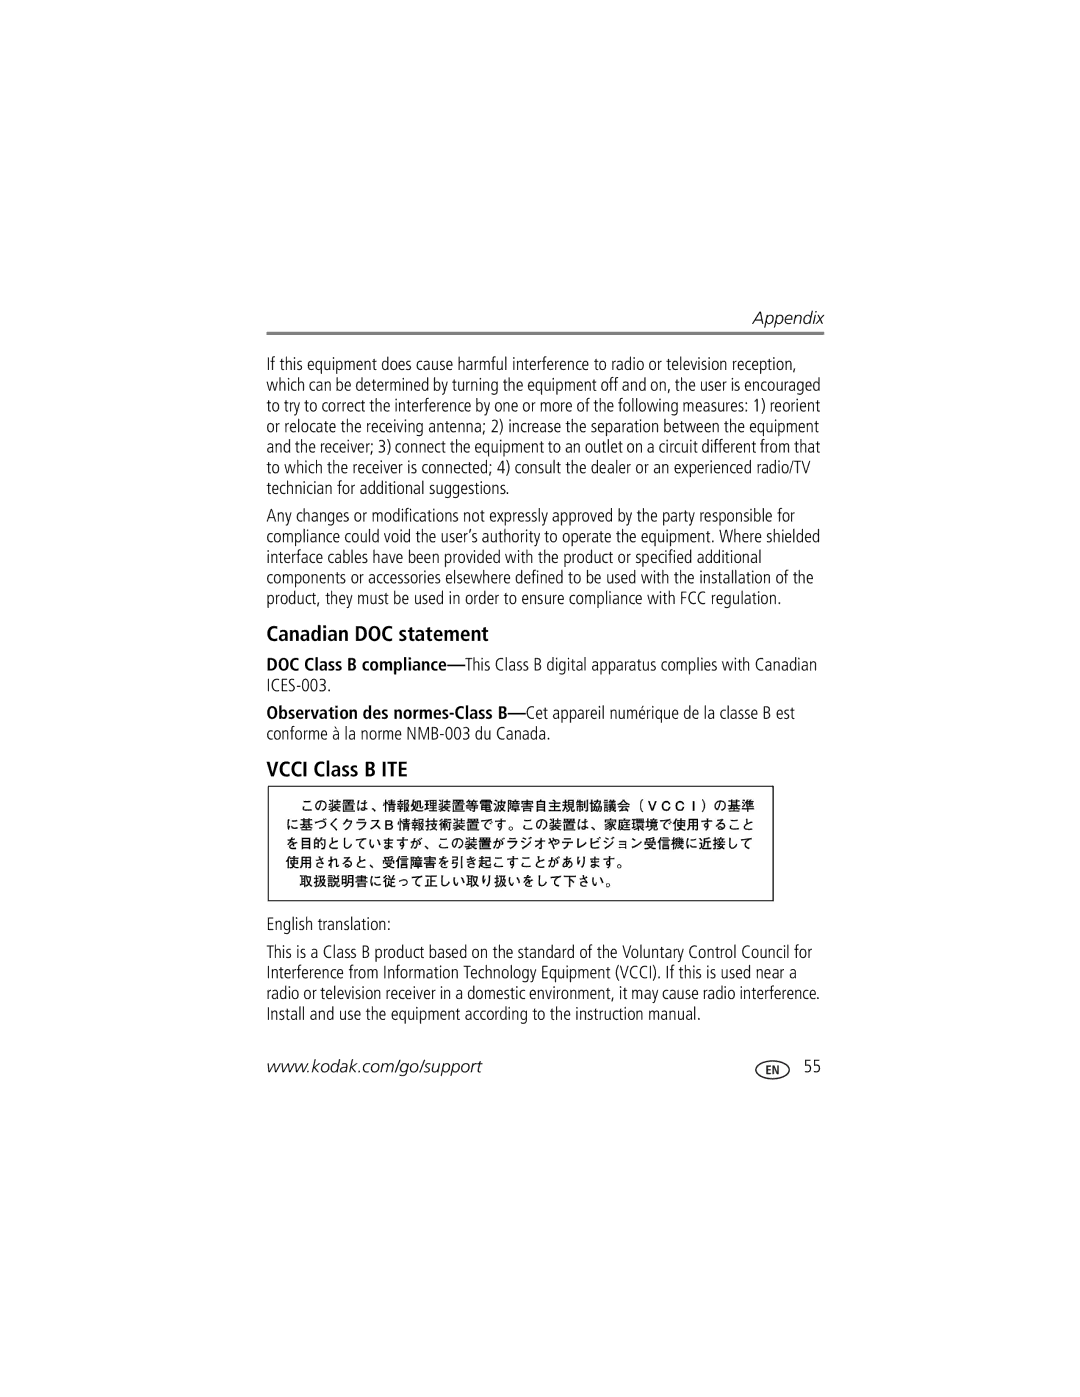 Kodak Series 3 manual Canadian DOC statement, Vcci Class B ITE, English translation 